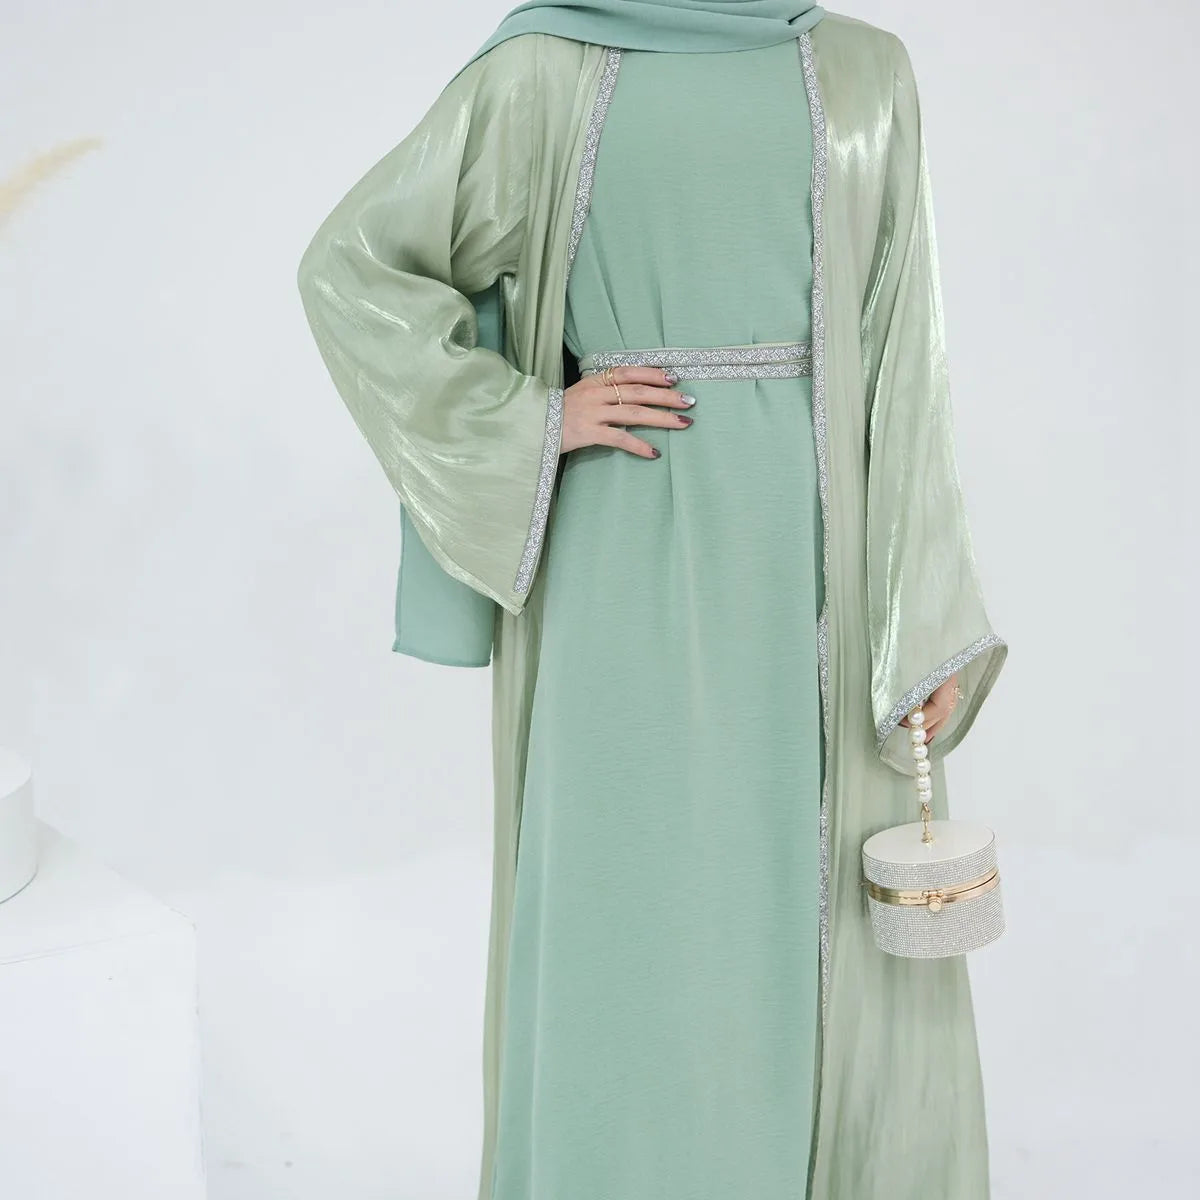 2 Pieces Hotfix Rhinestone Bright Open Abaya Dress Set With Inner Dress